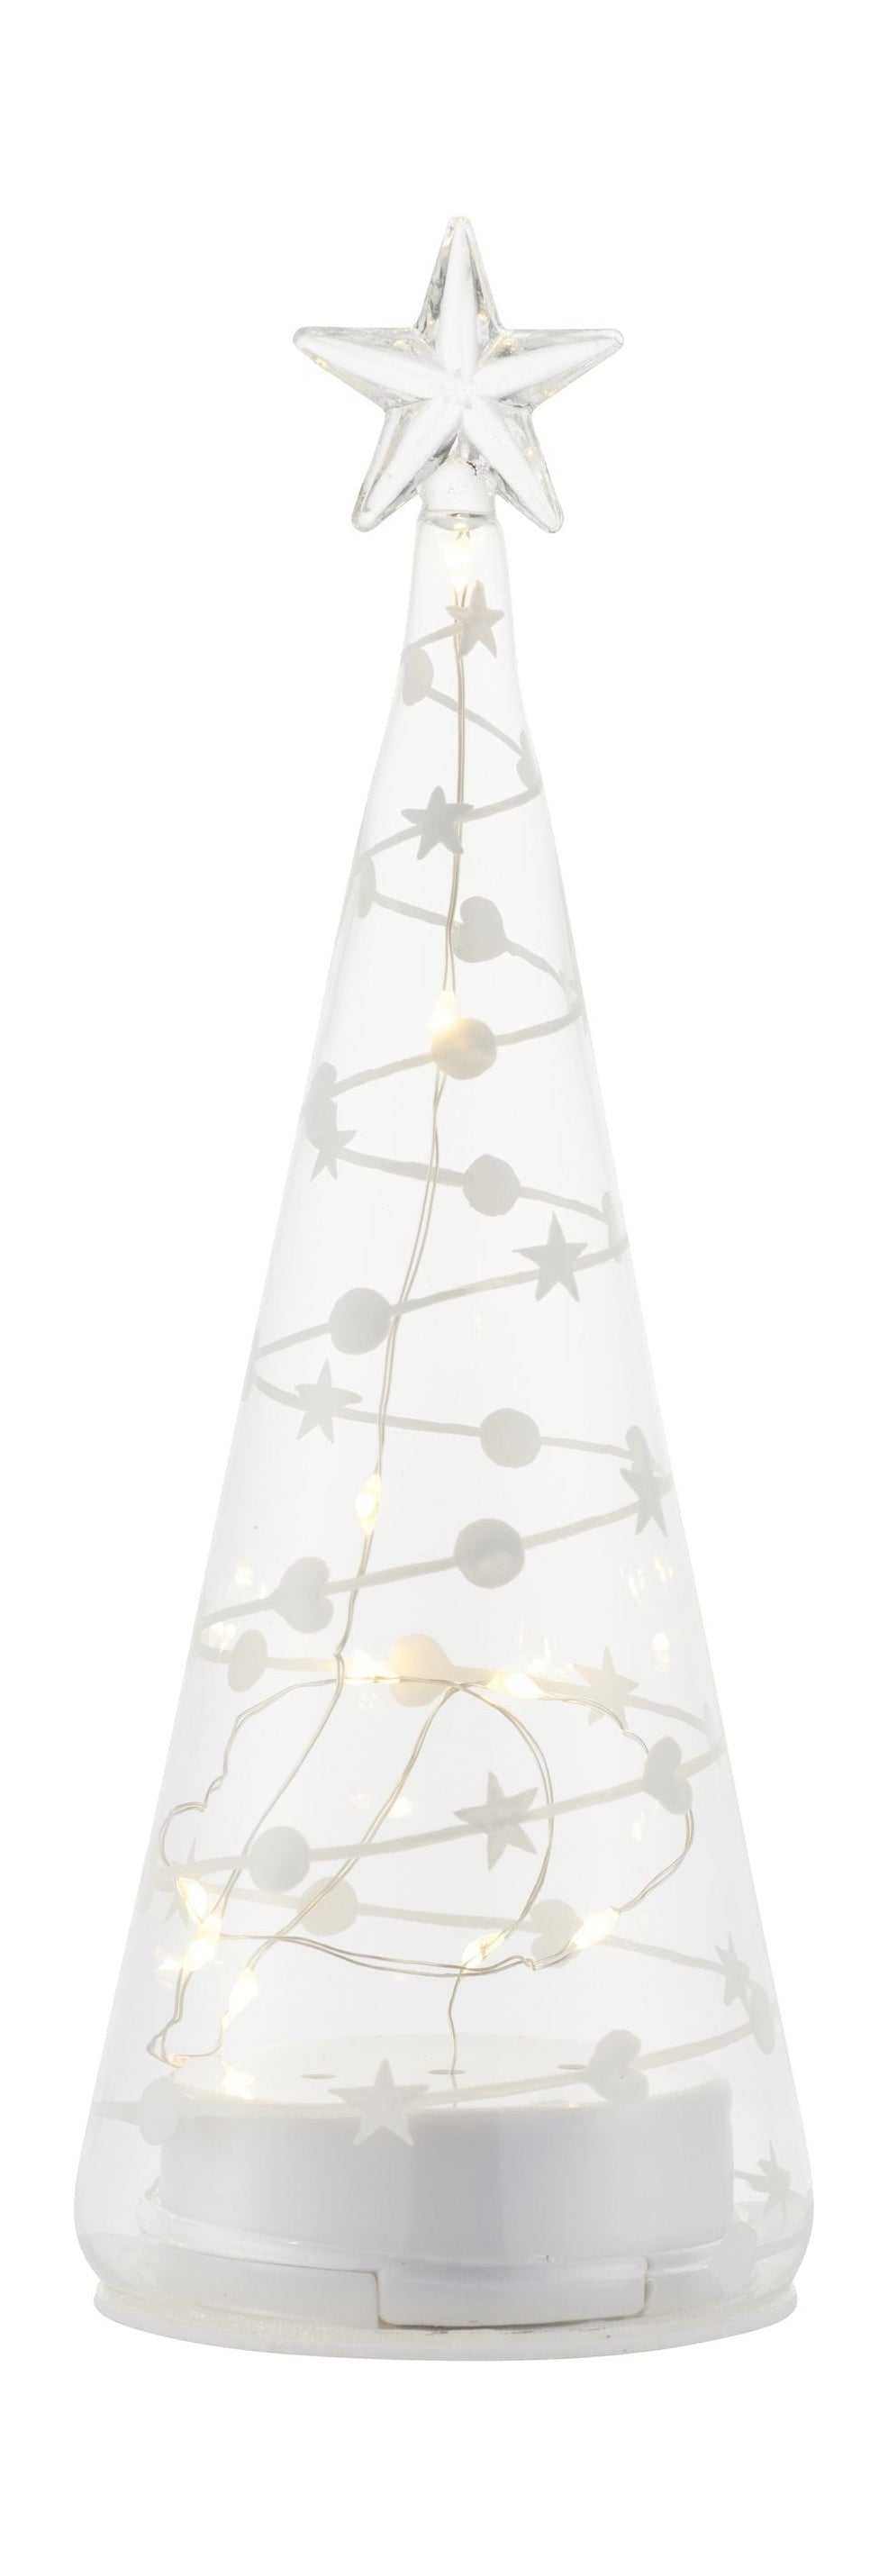 Sirius Sweet Christmas Tree, H22 Cm, White/Clear